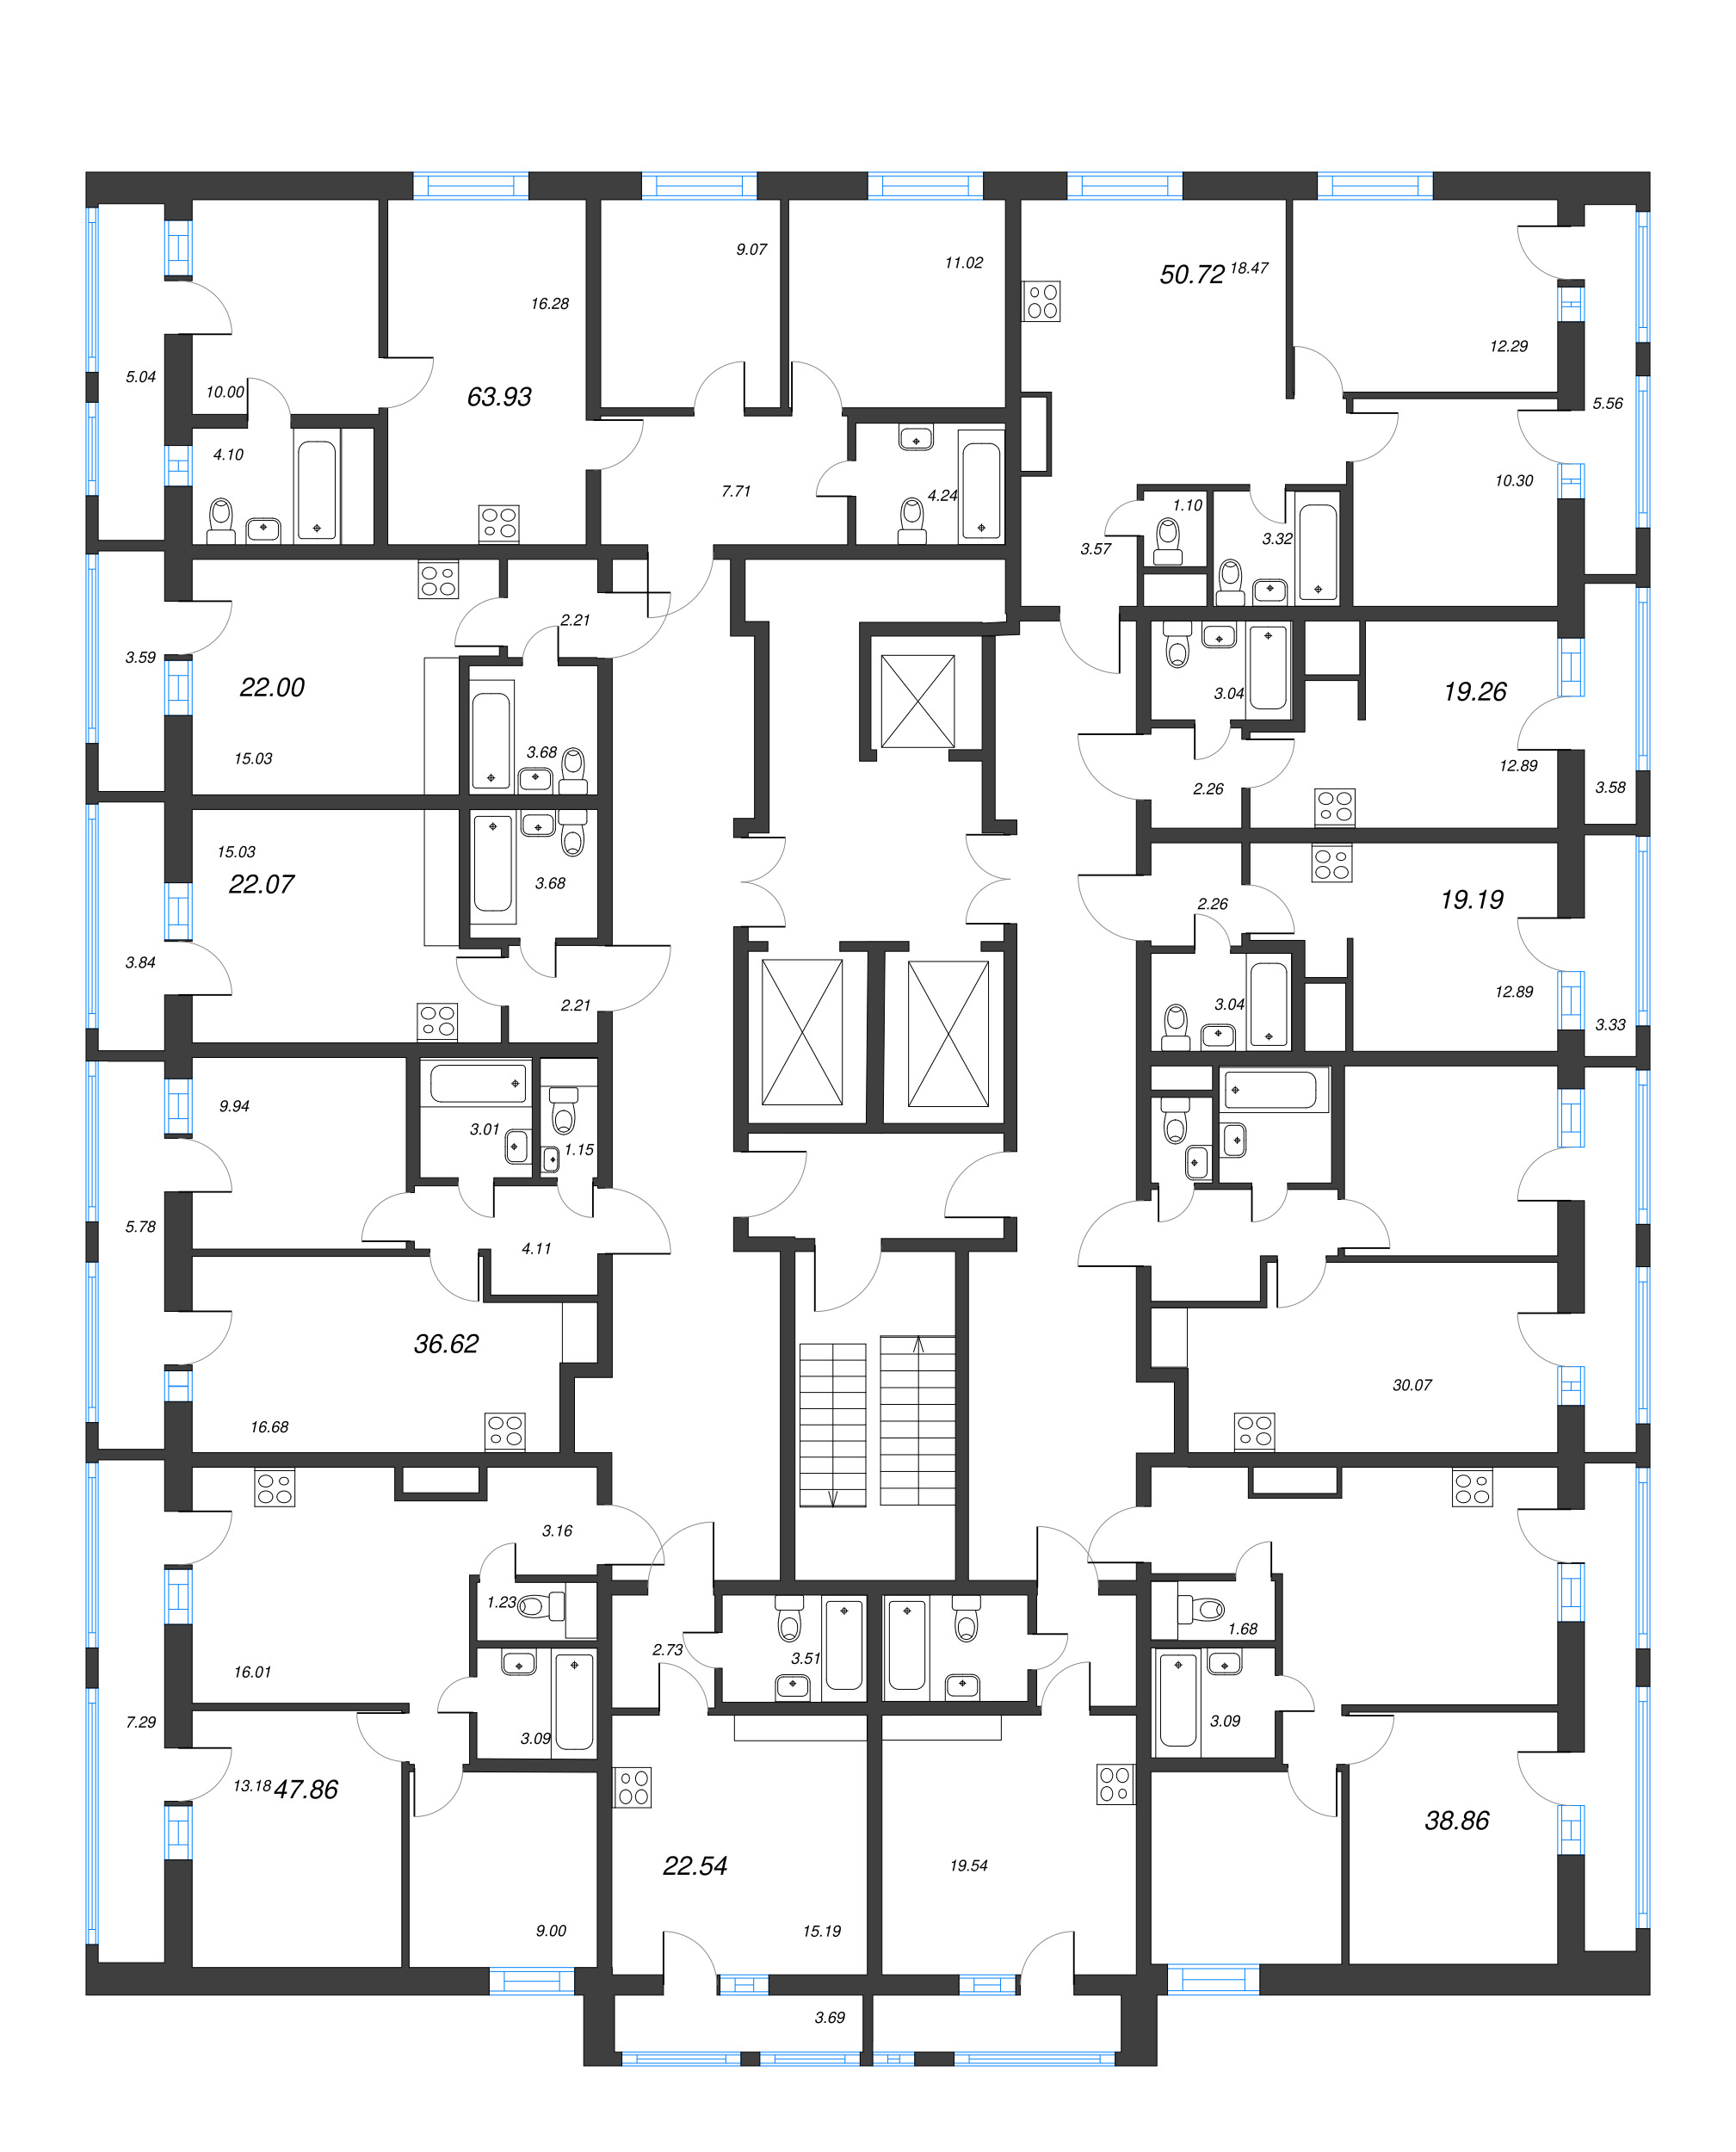 2-комнатная (Евро) квартира, 36.62 м² - планировка этажа